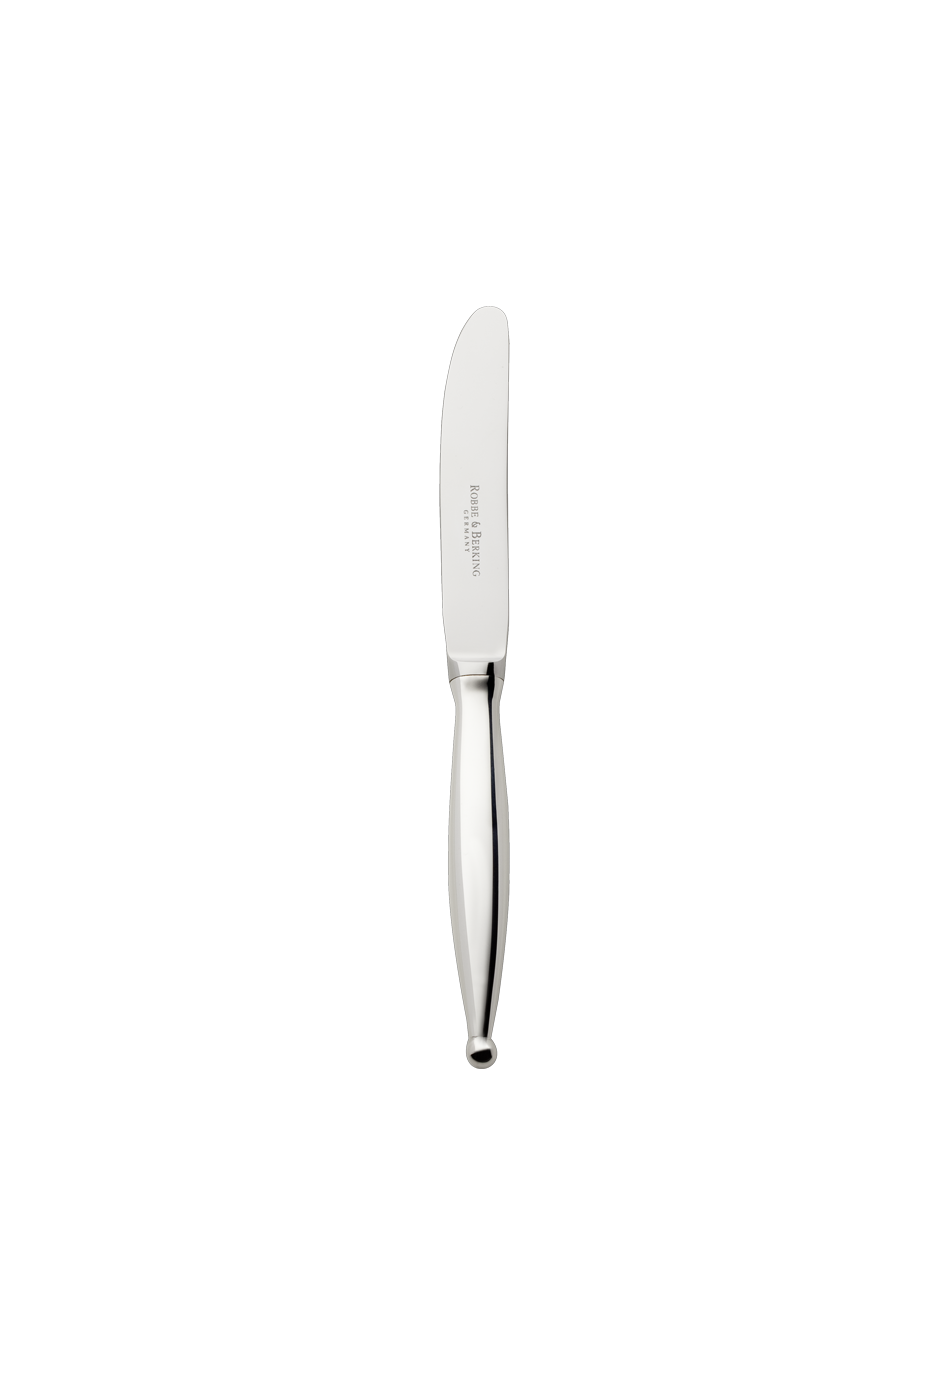 Gio Cake Knife / Fruit Knife (925 Sterling Silver)